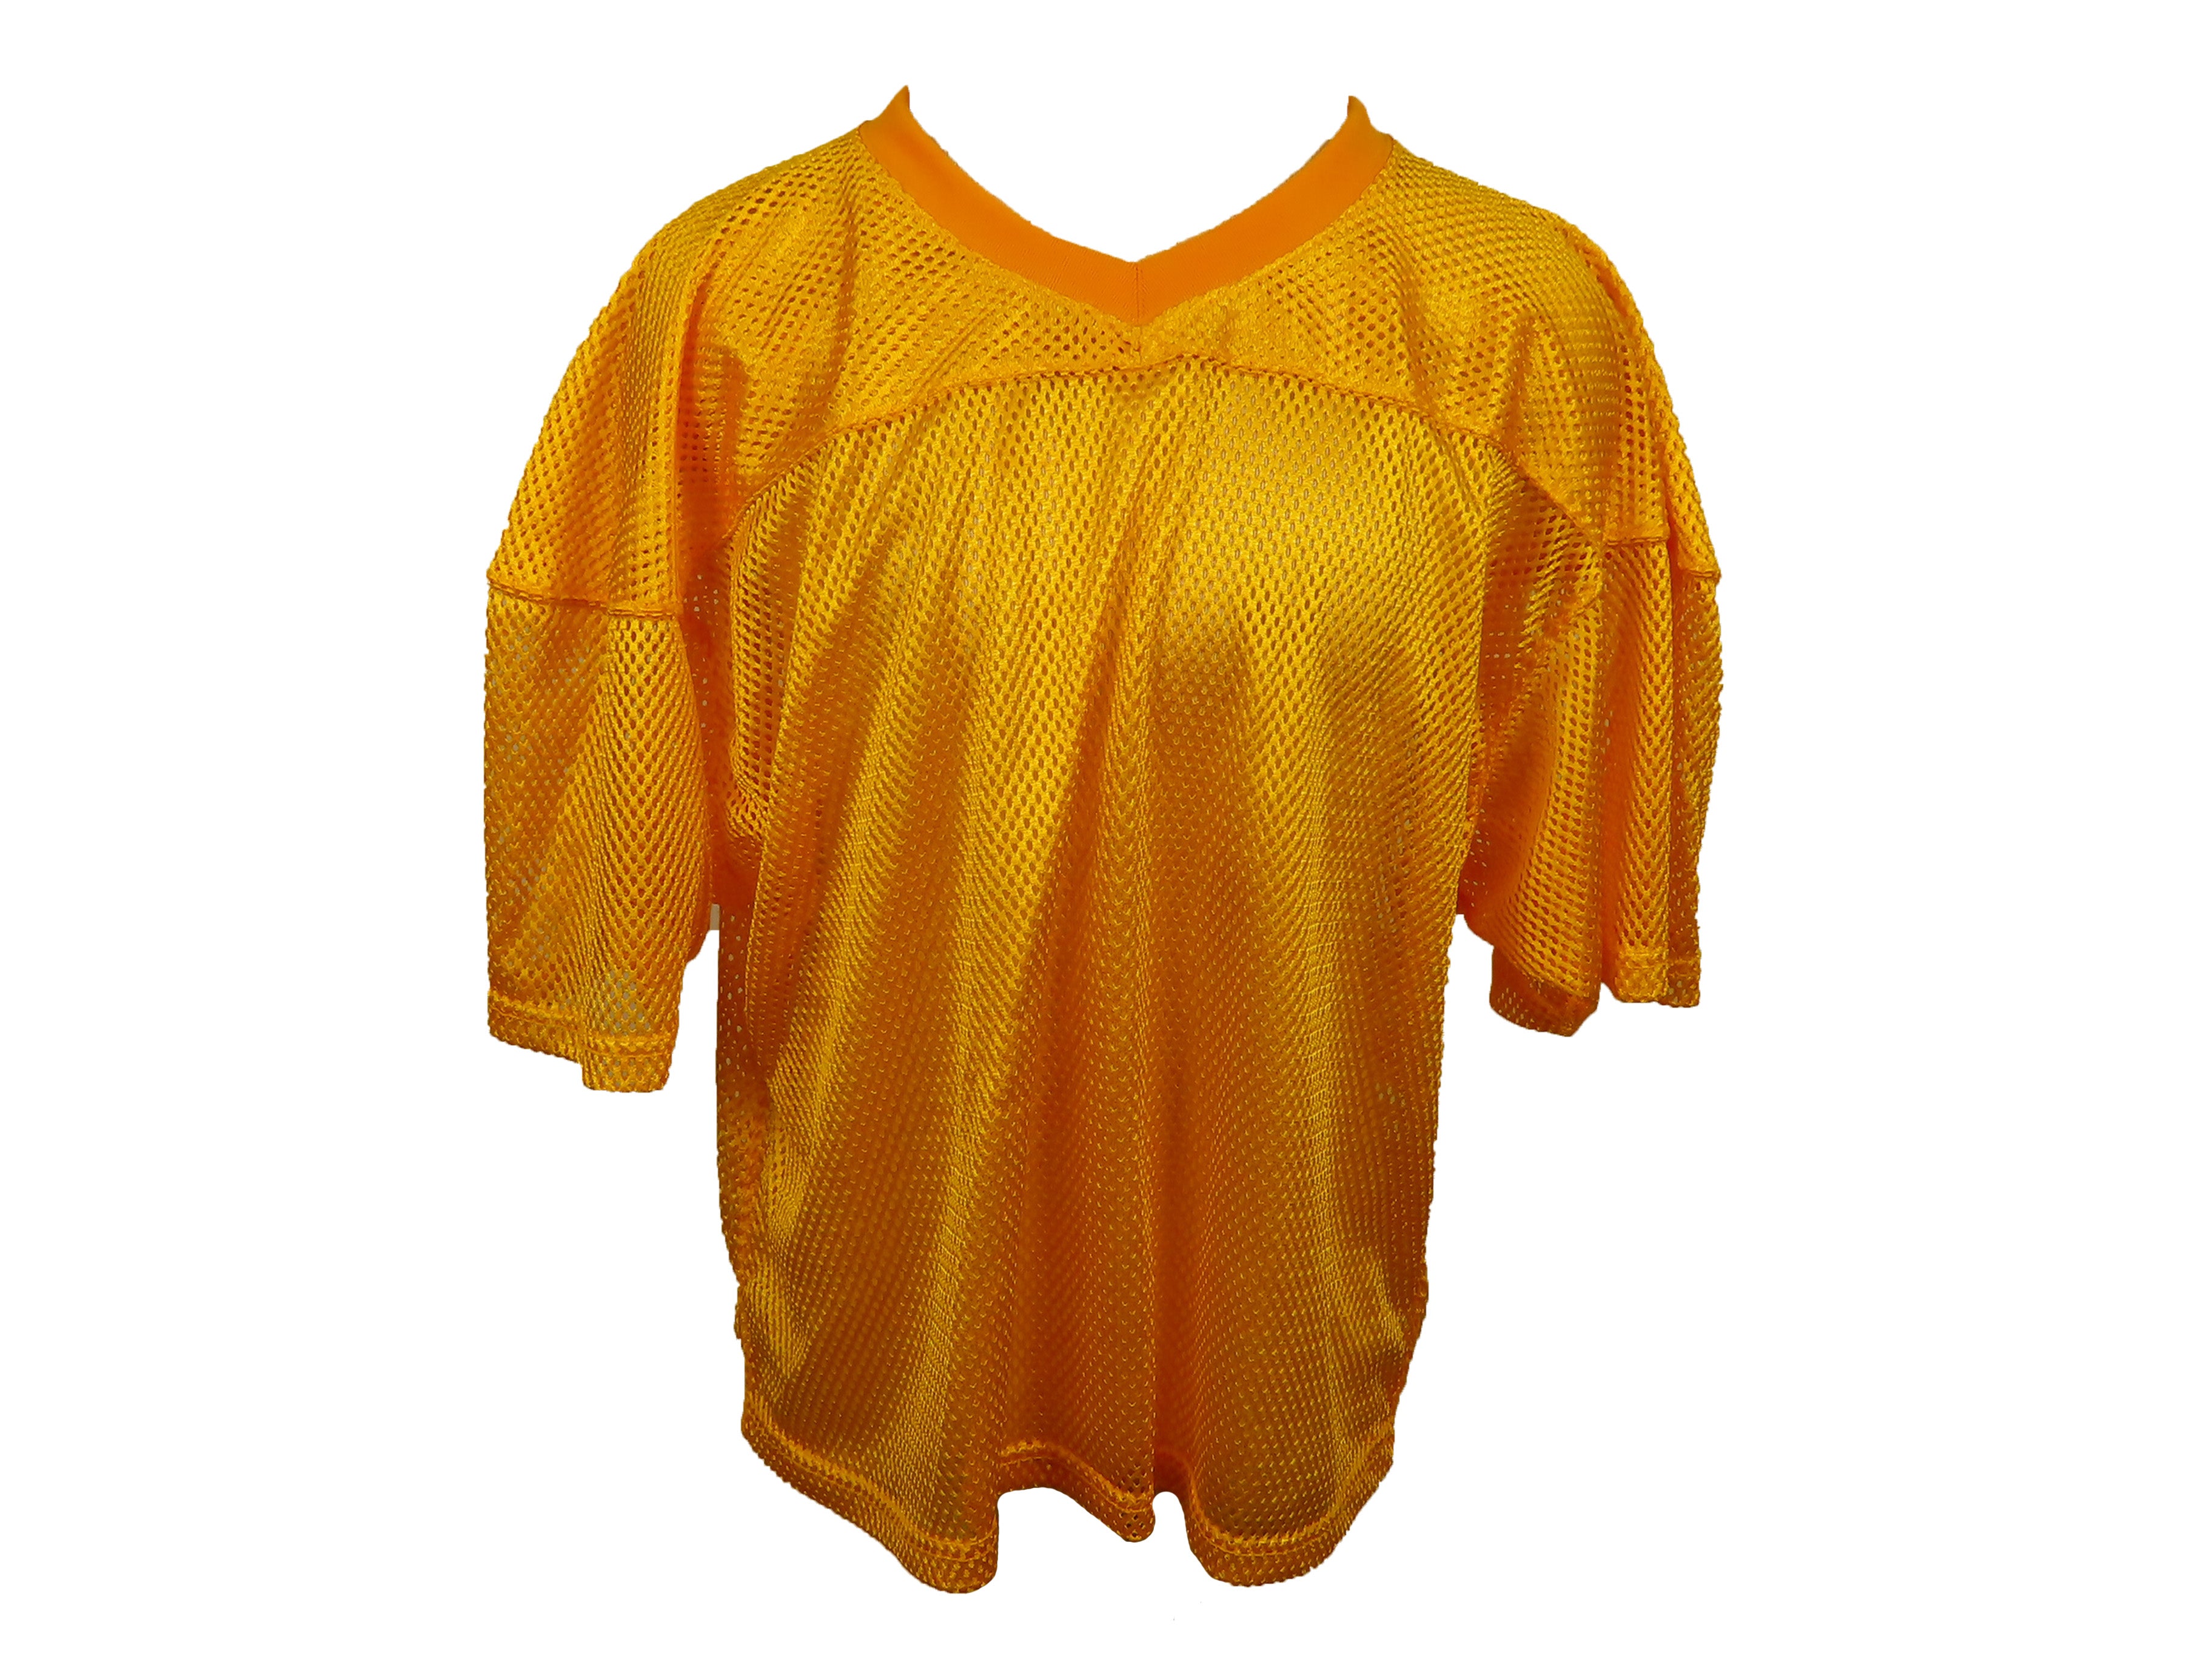 orange practice football jersey